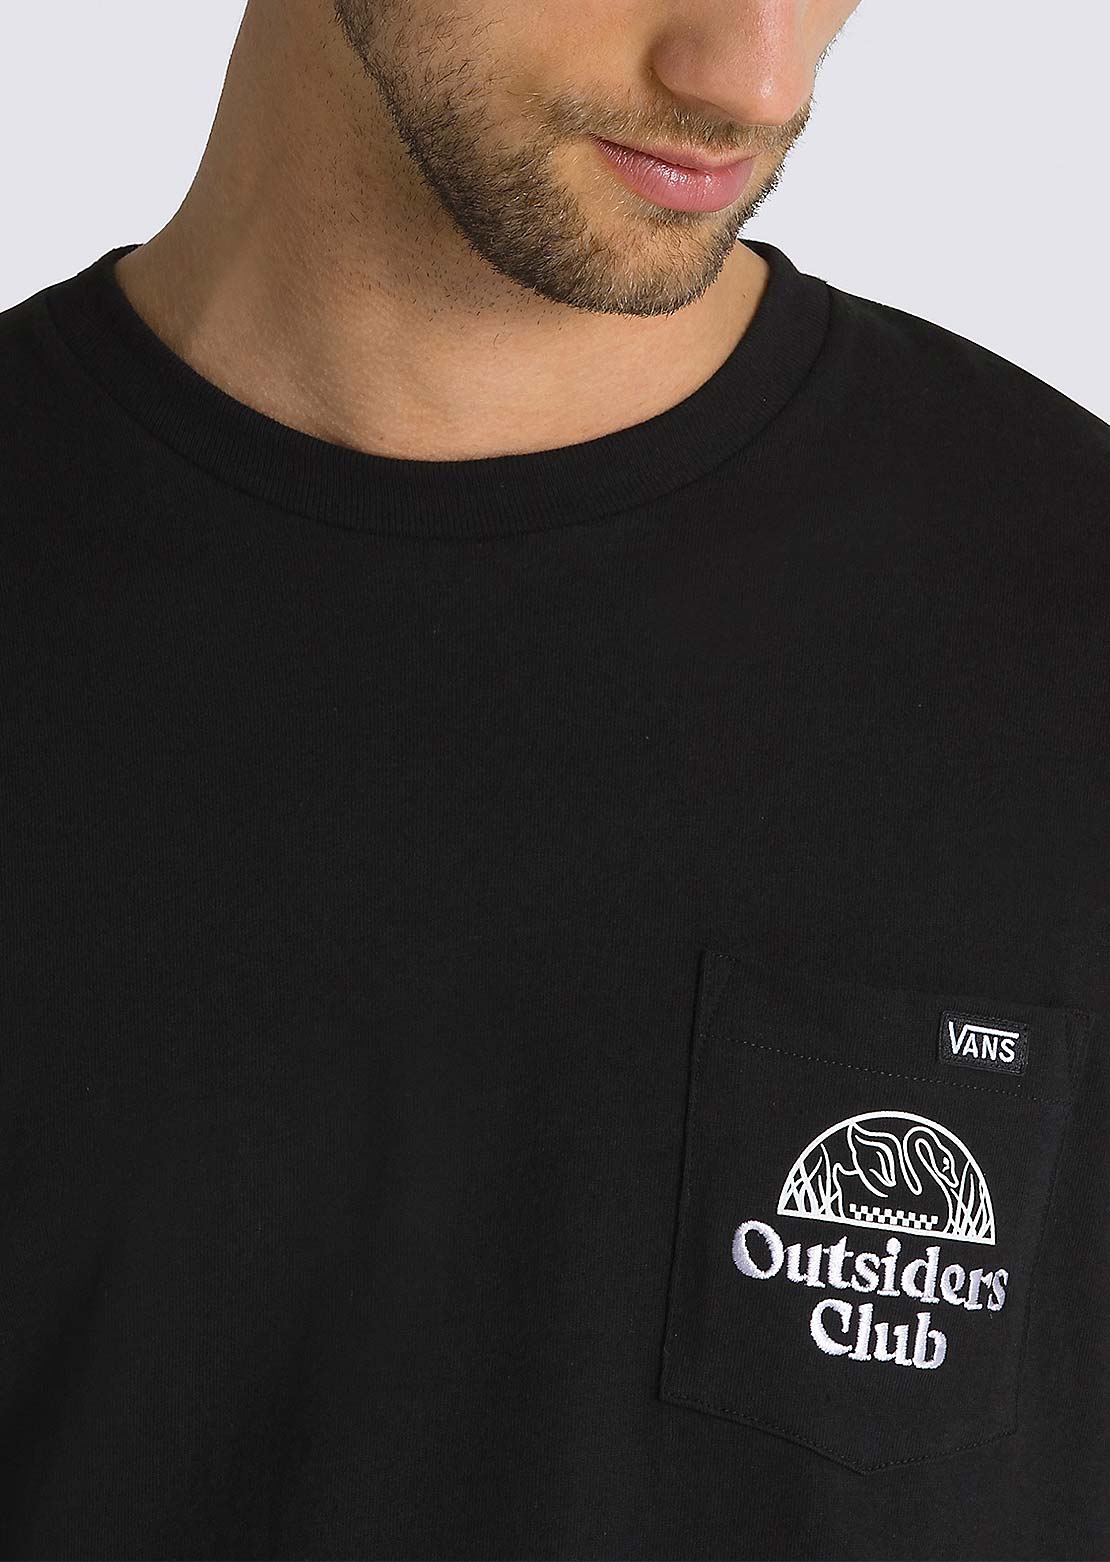 Vans Men&#39;s Outsiders Club Pocket T-Shirt Black